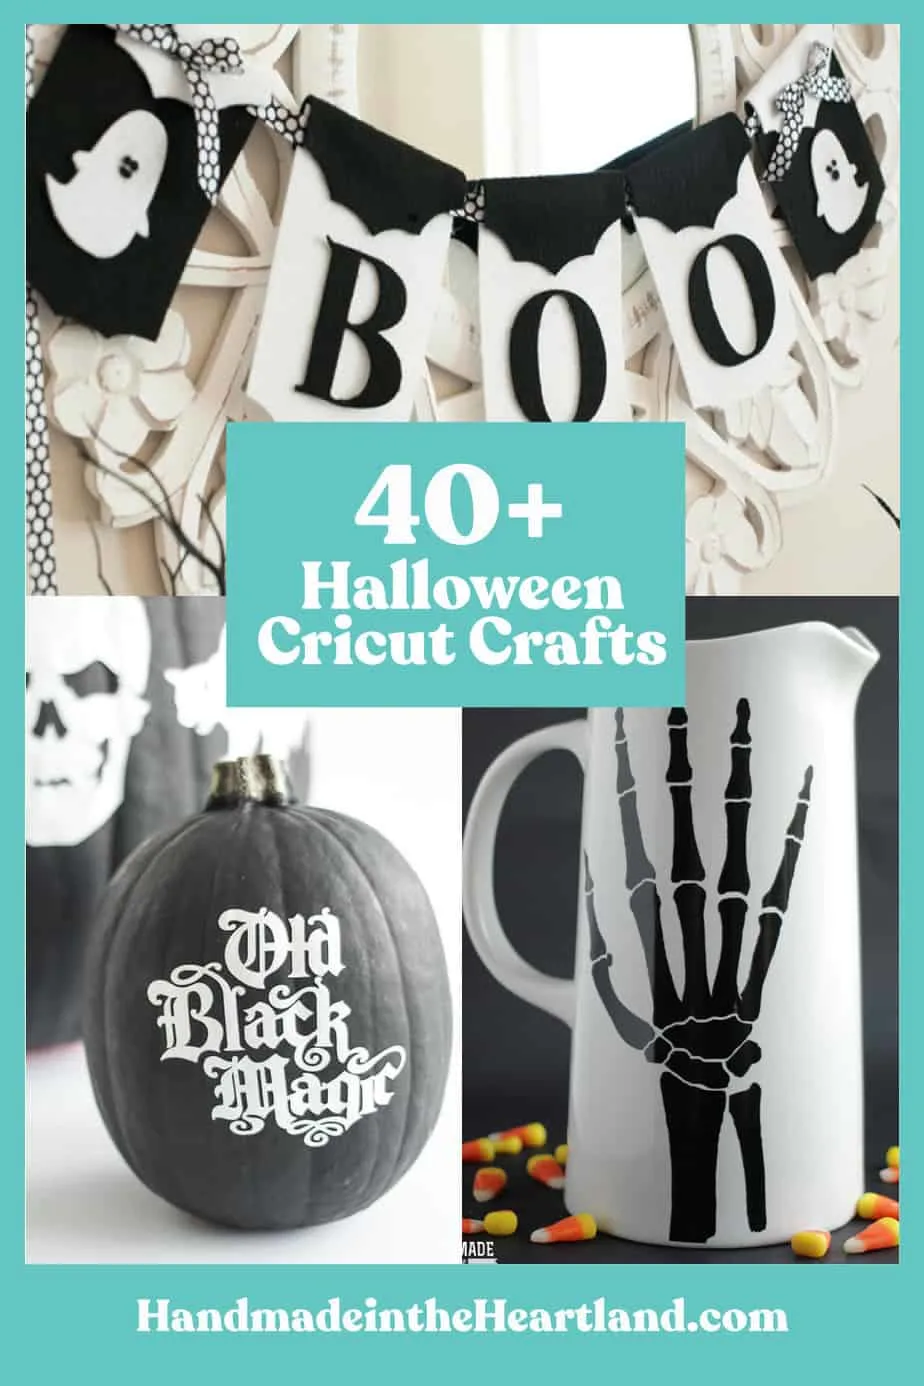 Over 40 Halloween Cricut Crafts